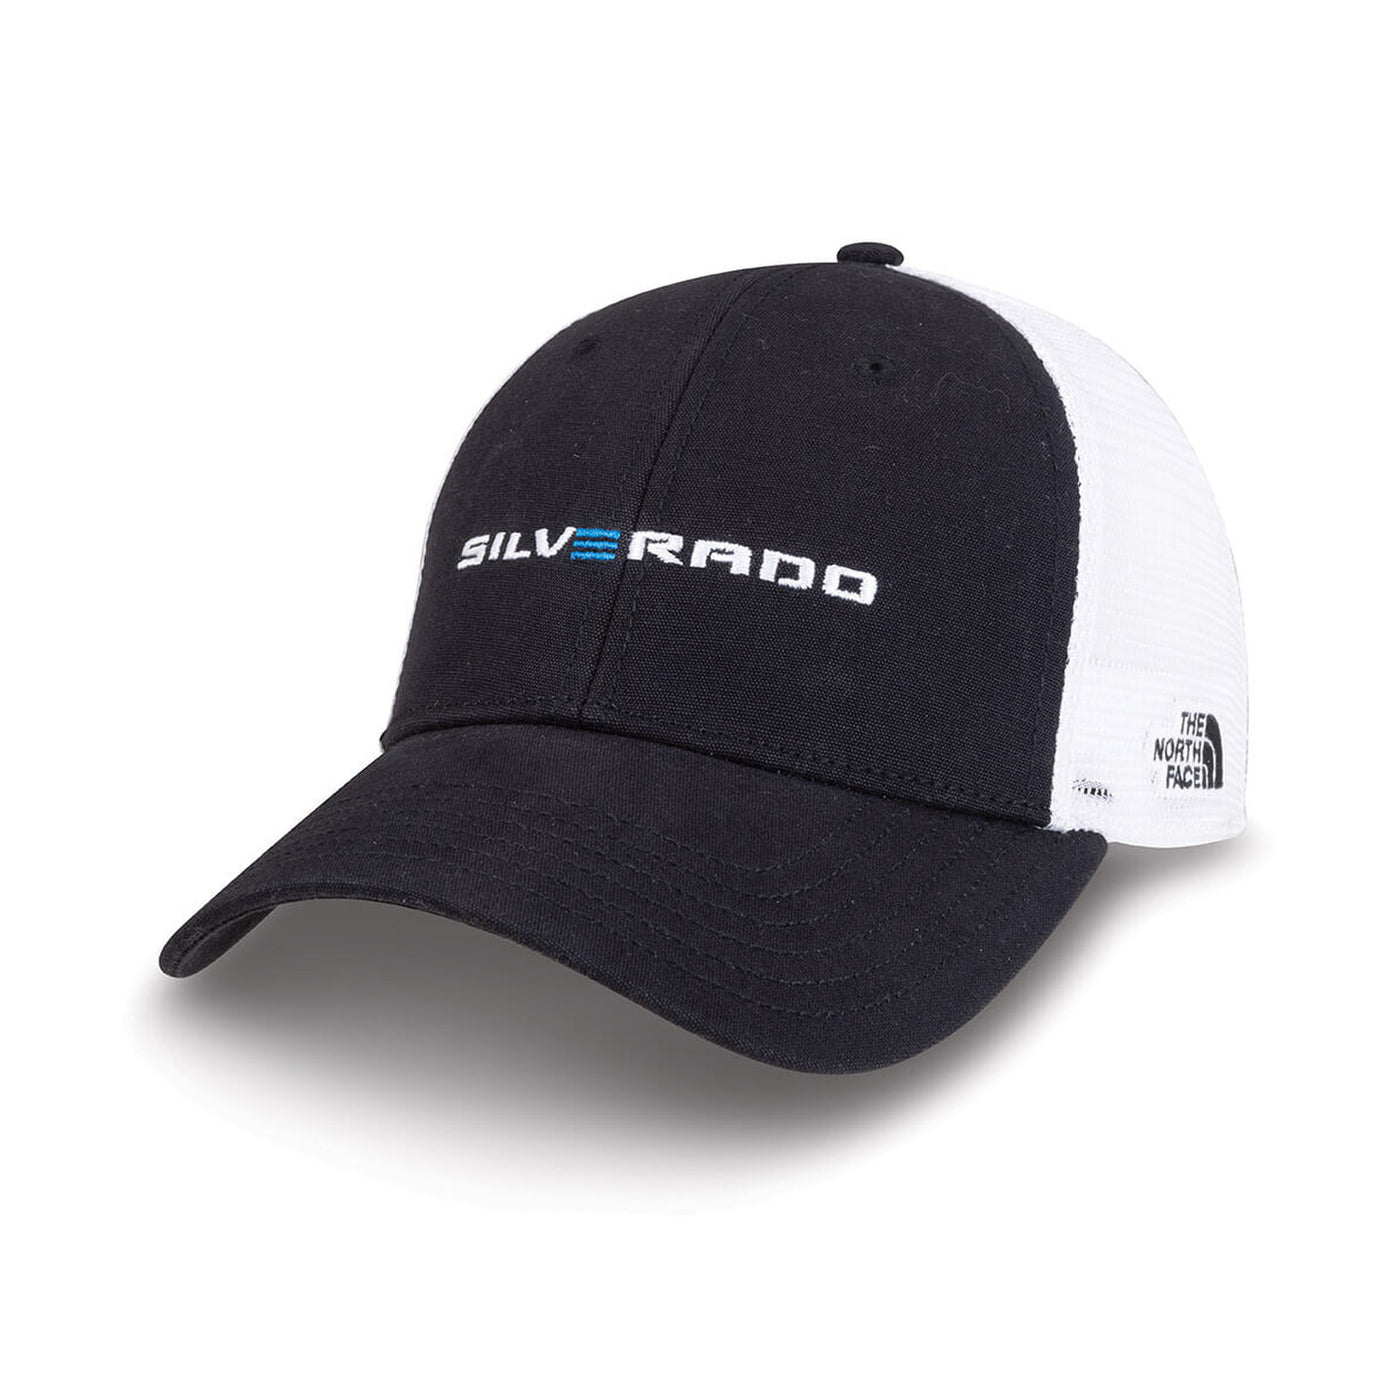 Silverado EV The North Face Ultimate Trucker Hat